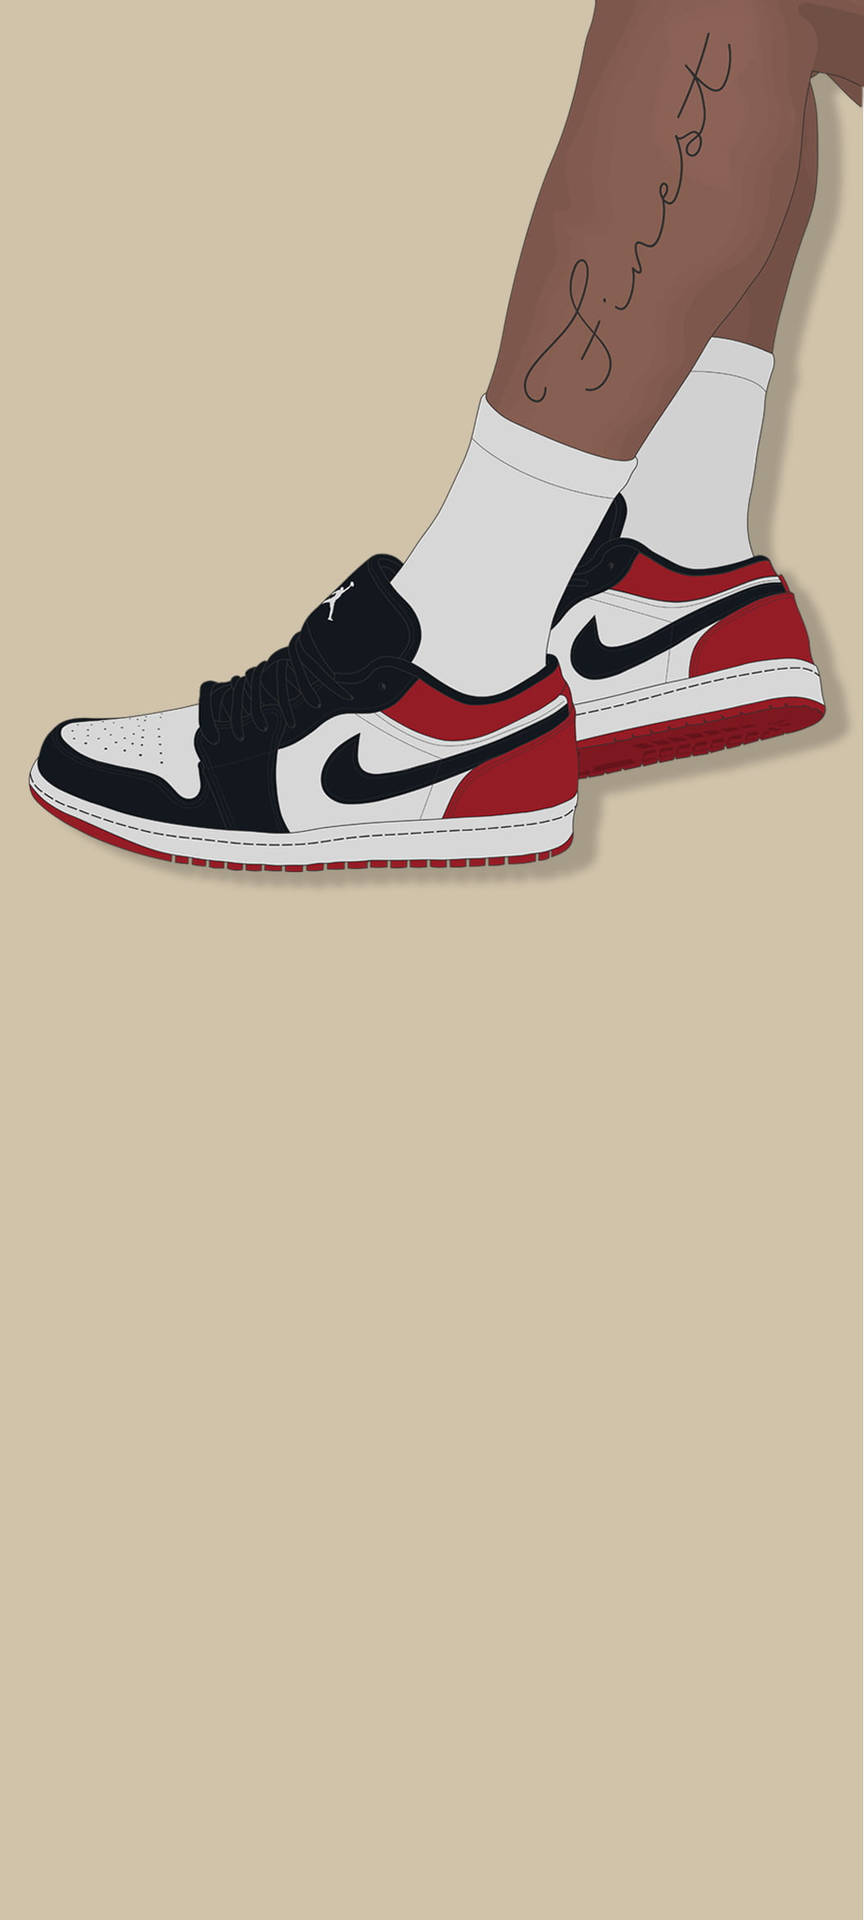 Cool Depiction Of Nike Jordan 1 Background